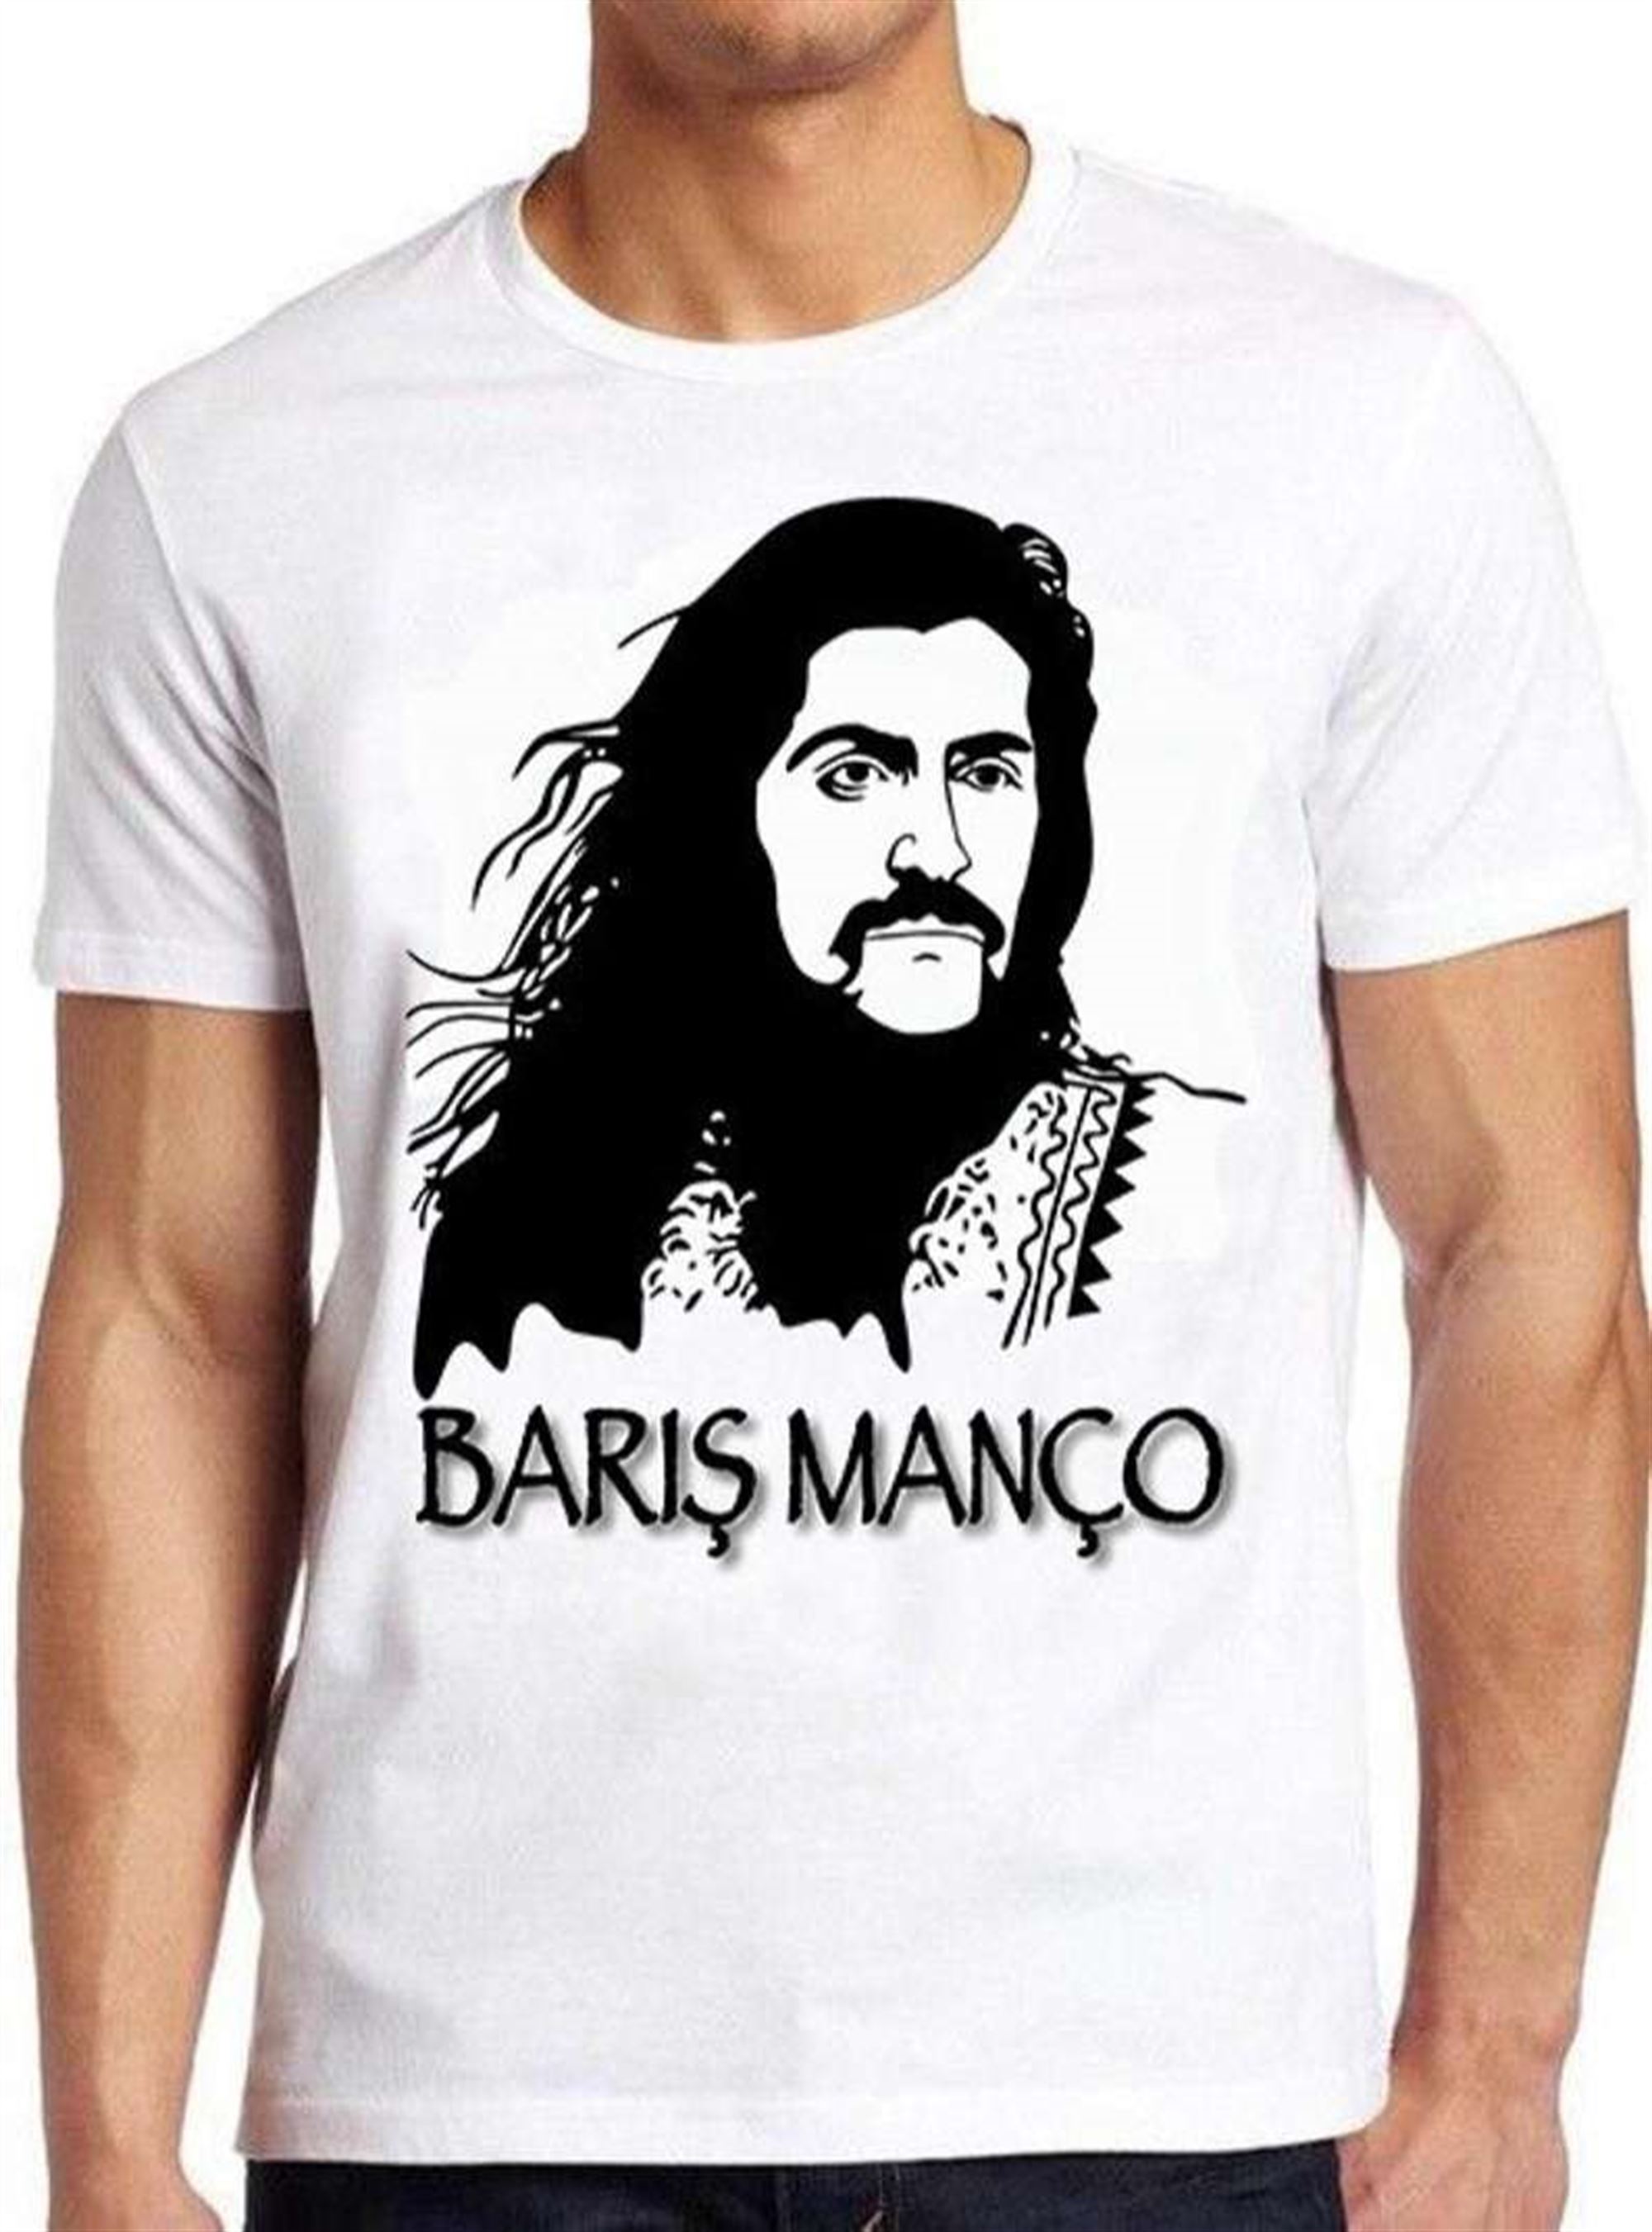 Baris Manco T Shirt Size Up To 5xl